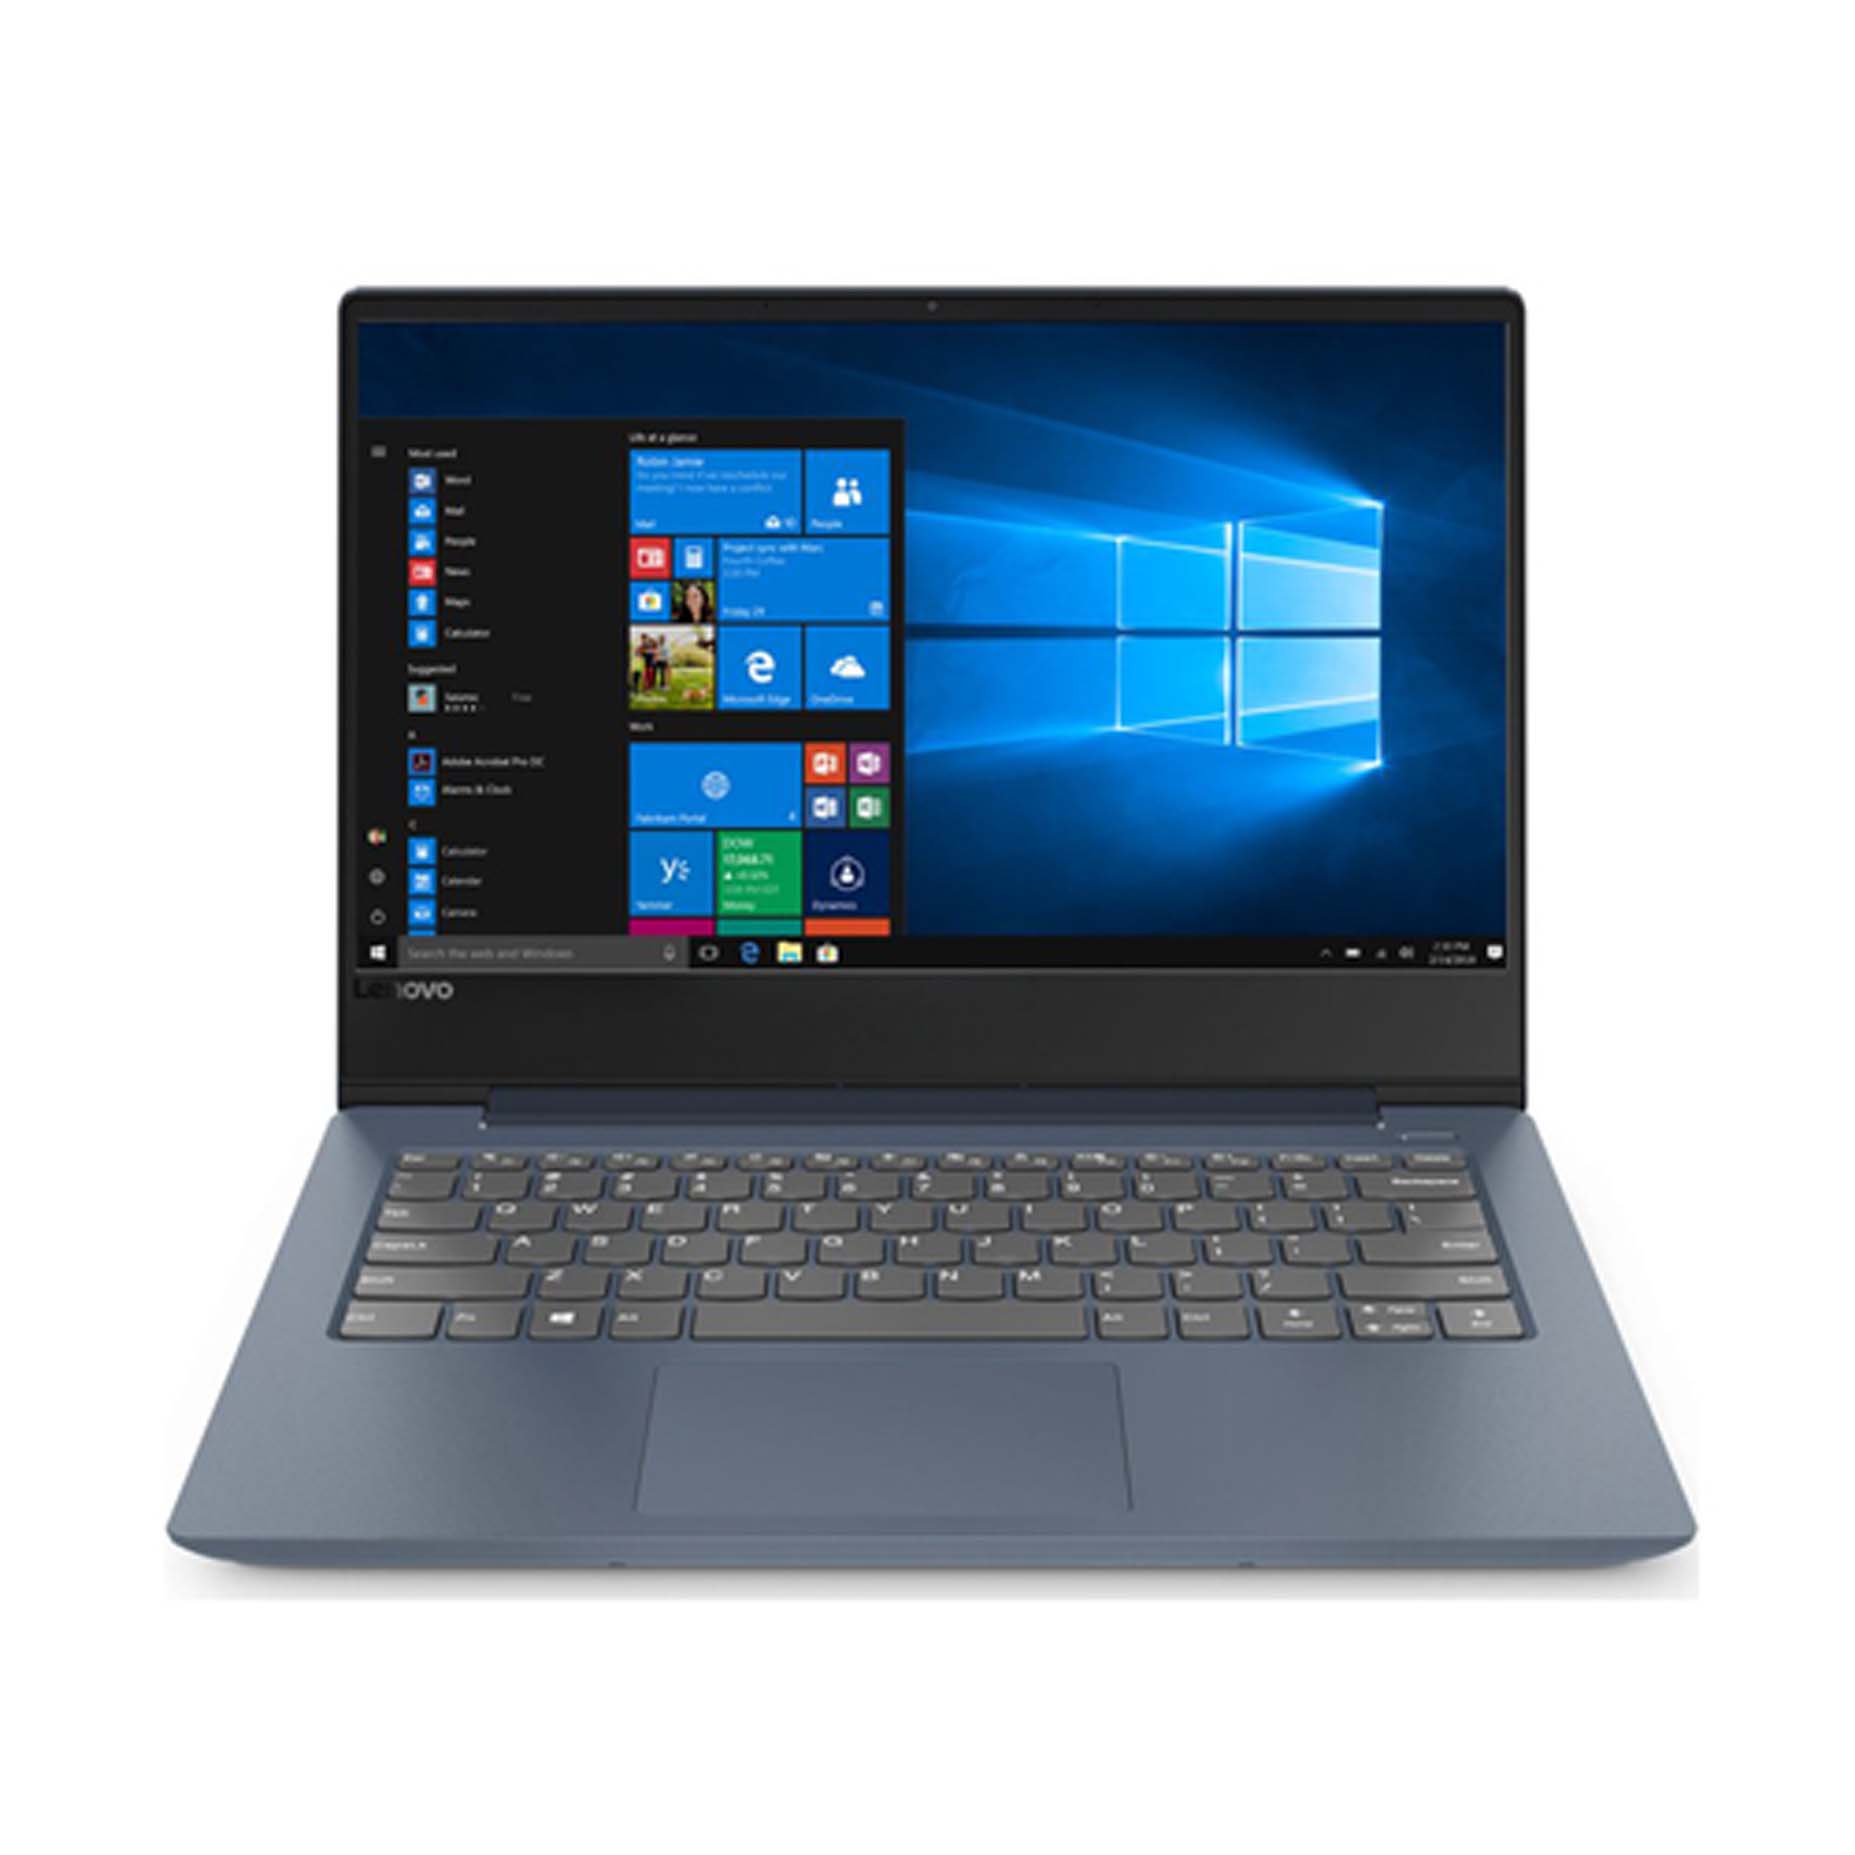 Harga Lenovo Ideapad IP330S-14IKB 6KID Laptop Intel Core i5-8250U 8GB 1TB + 16GB Opnane AMD Radeon 530 2GB Windows 10 14Inch Blue